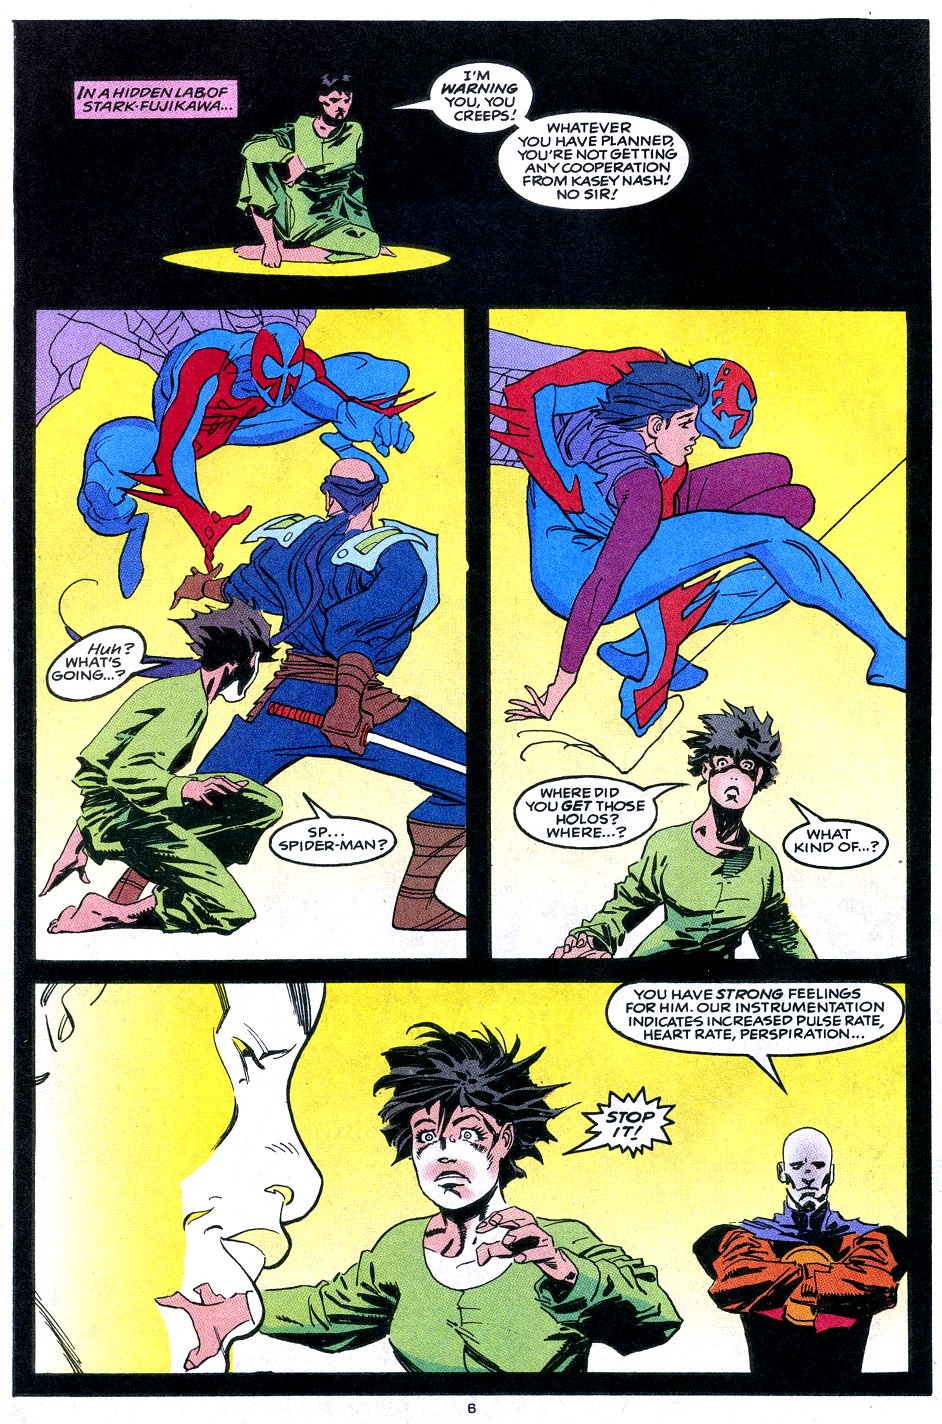 Spider-Man 2099 (1992) issue 23 - Page 5